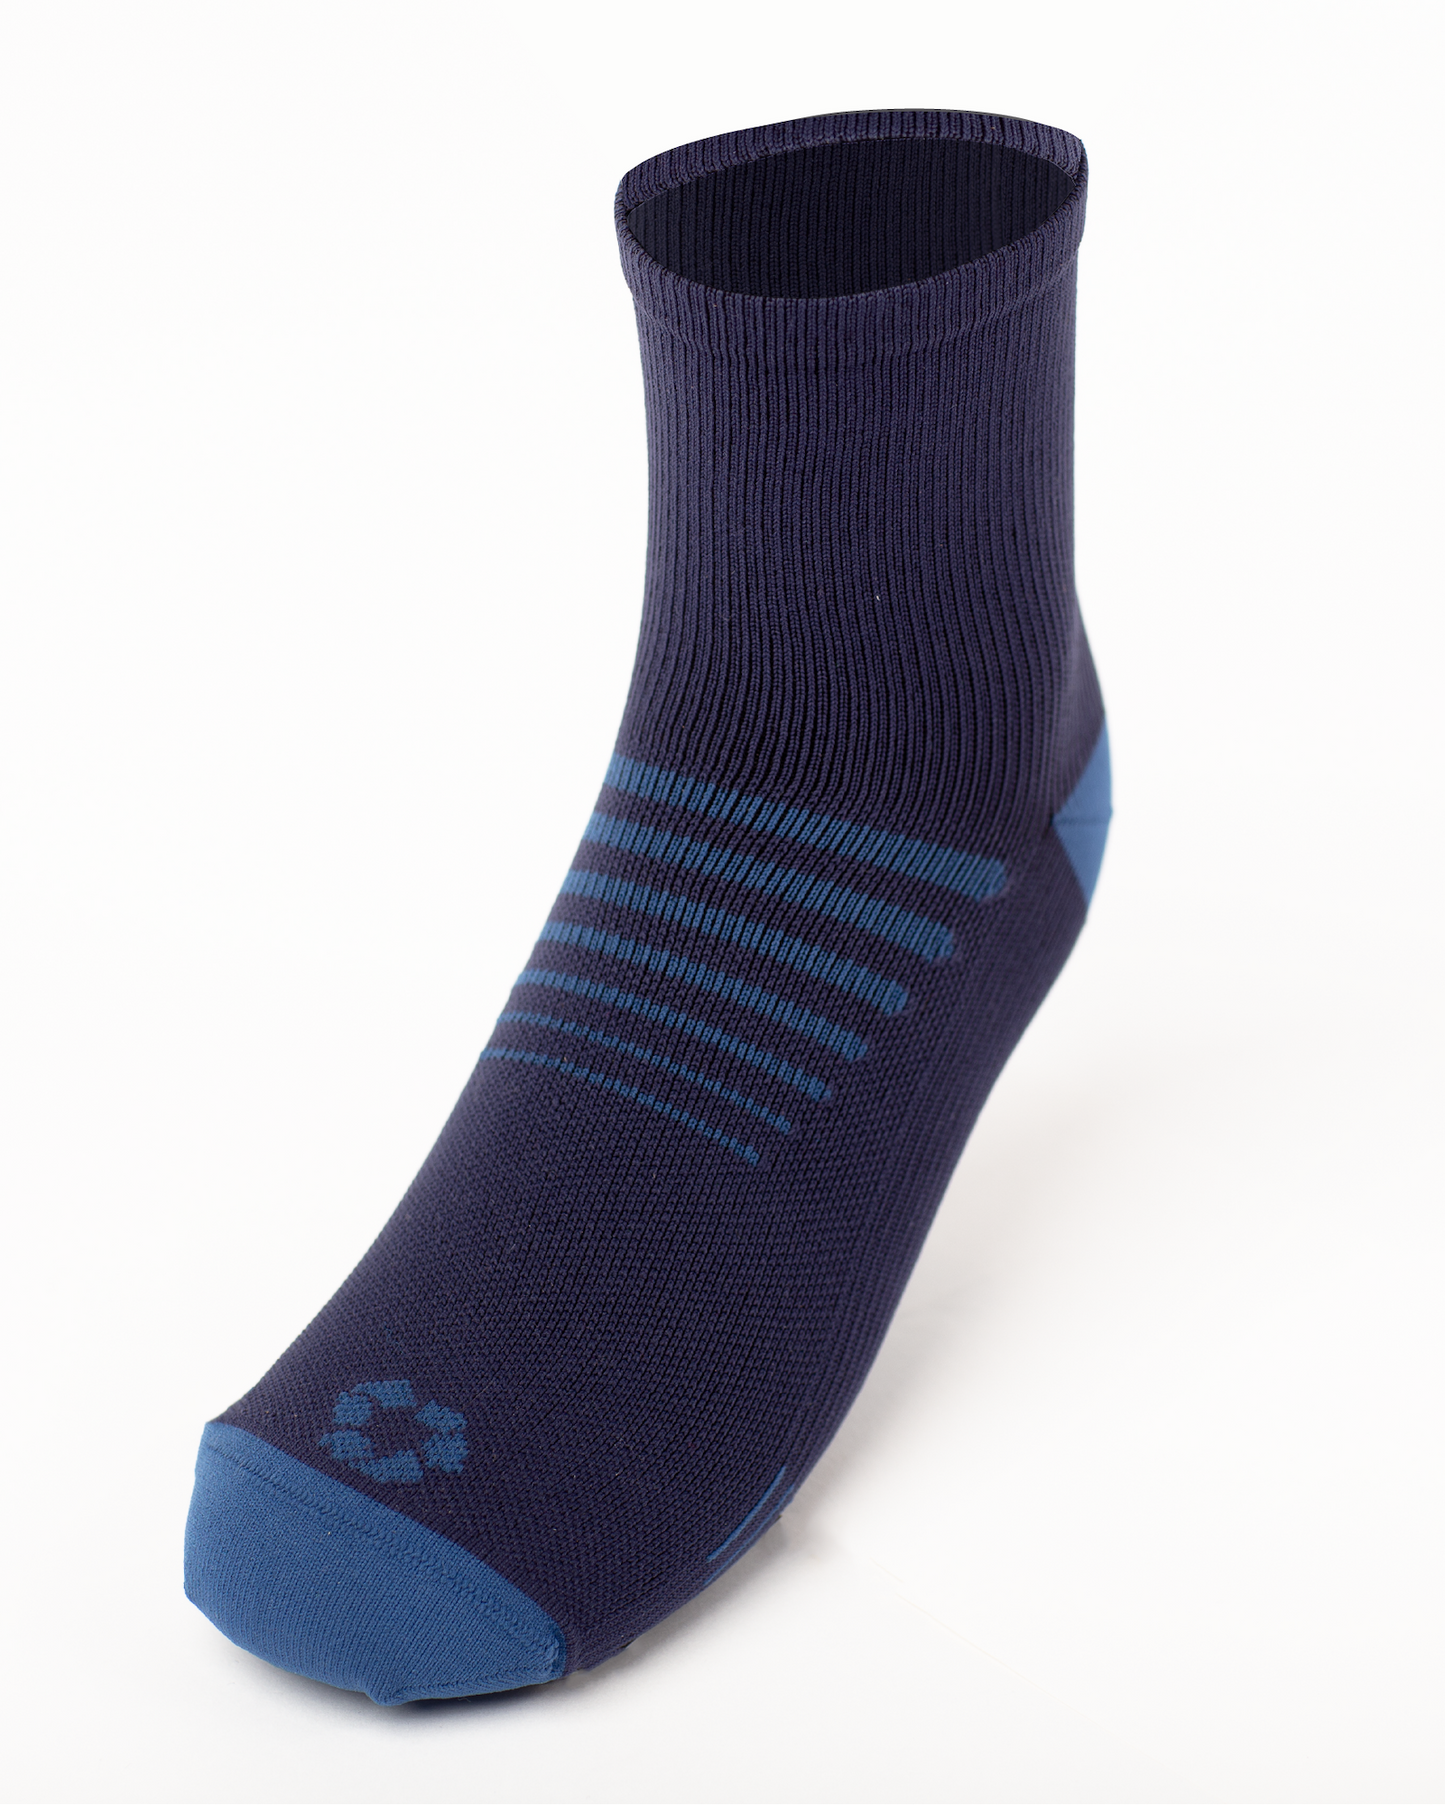 Recycled Performance 3/4 Unisex Socks - Blue